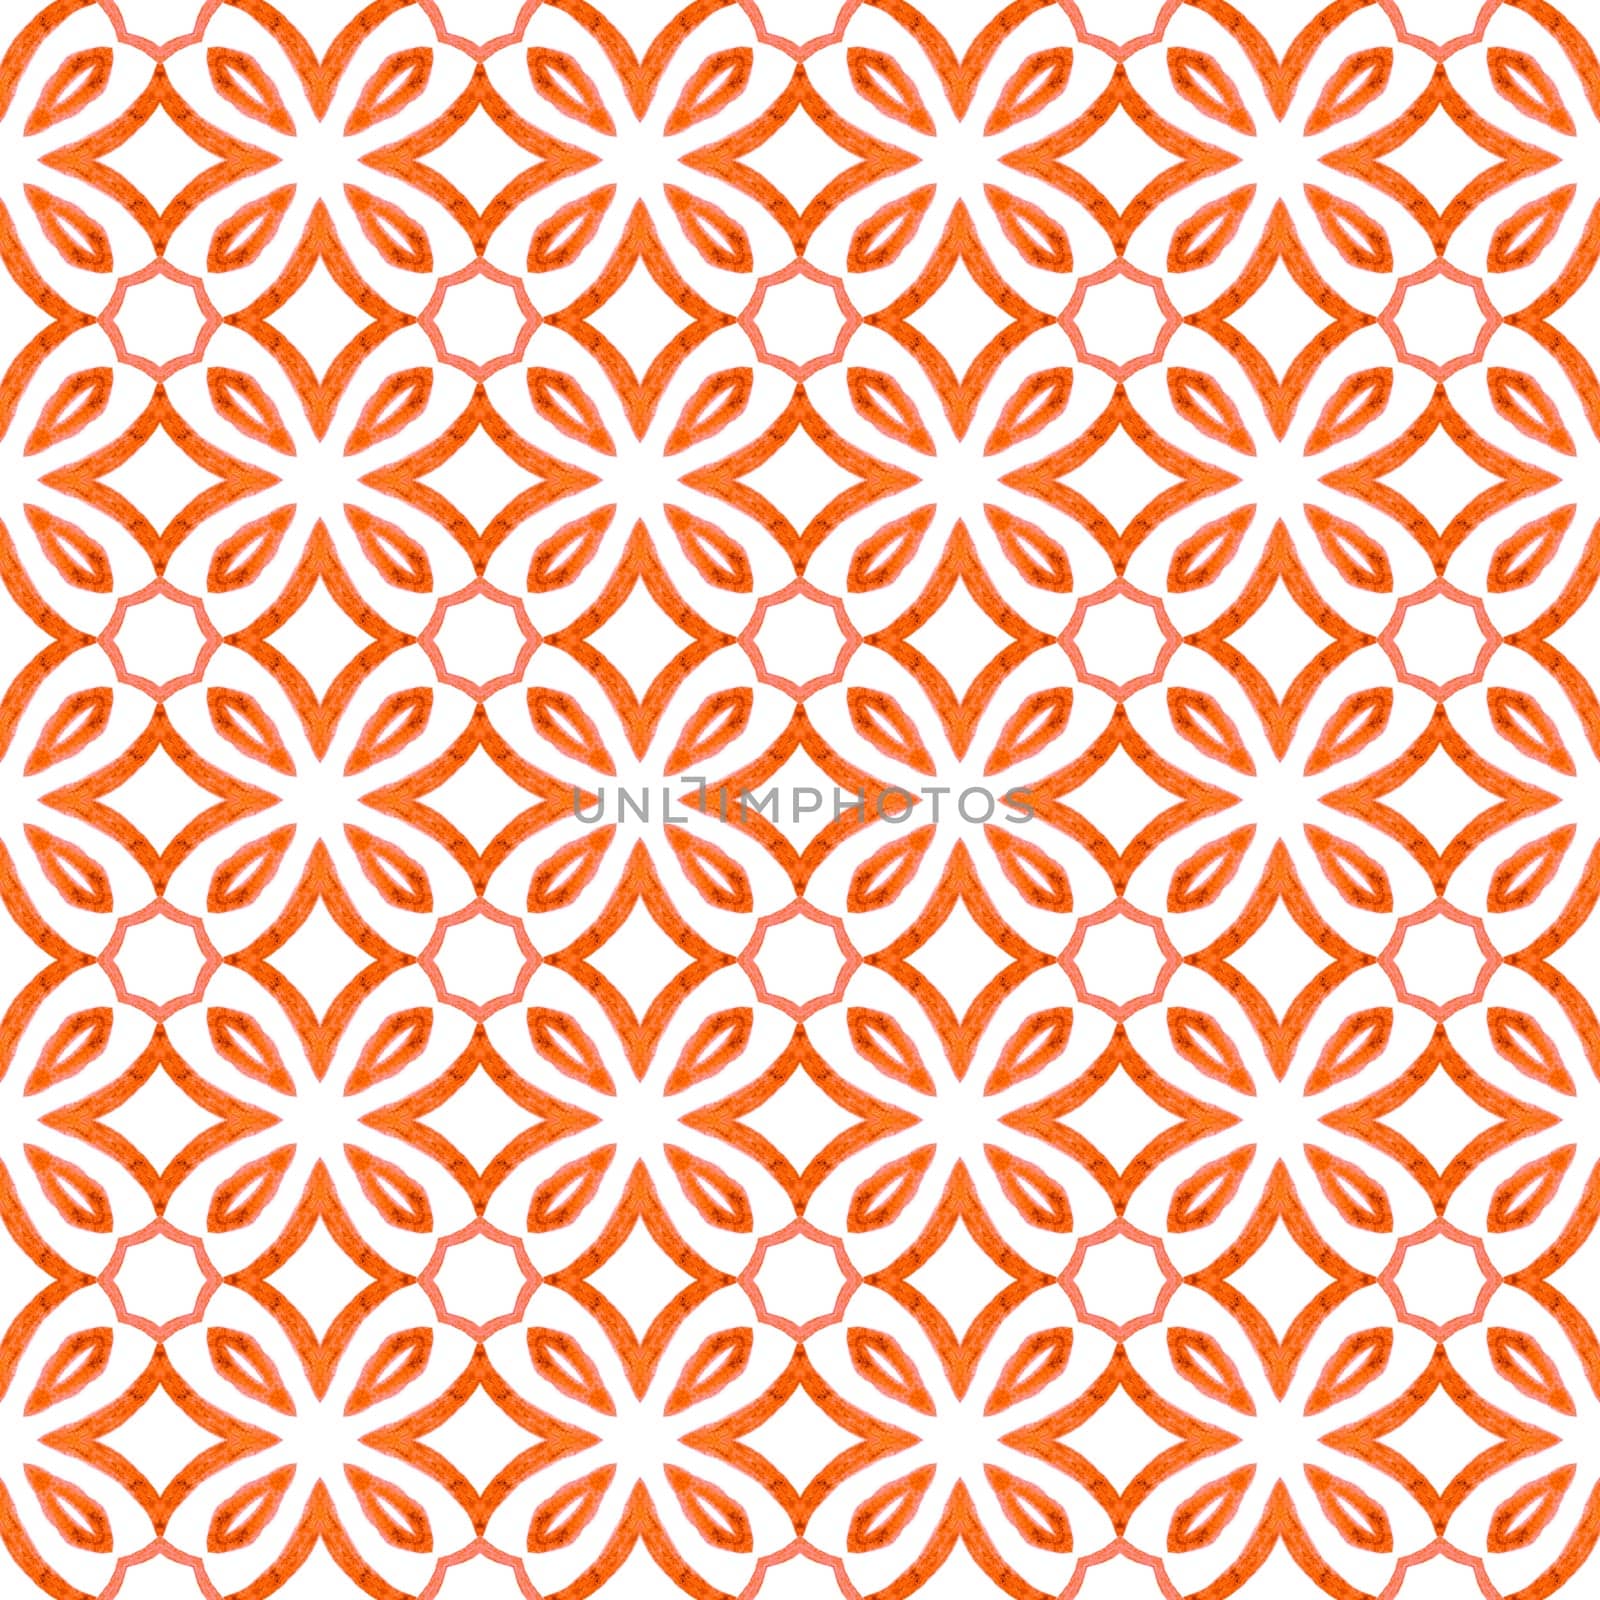 Textile ready elegant print, swimwear fabric, wallpaper, wrapping. Orange pleasing boho chic summer design. Chevron watercolor pattern. Green geometric chevron watercolor border.